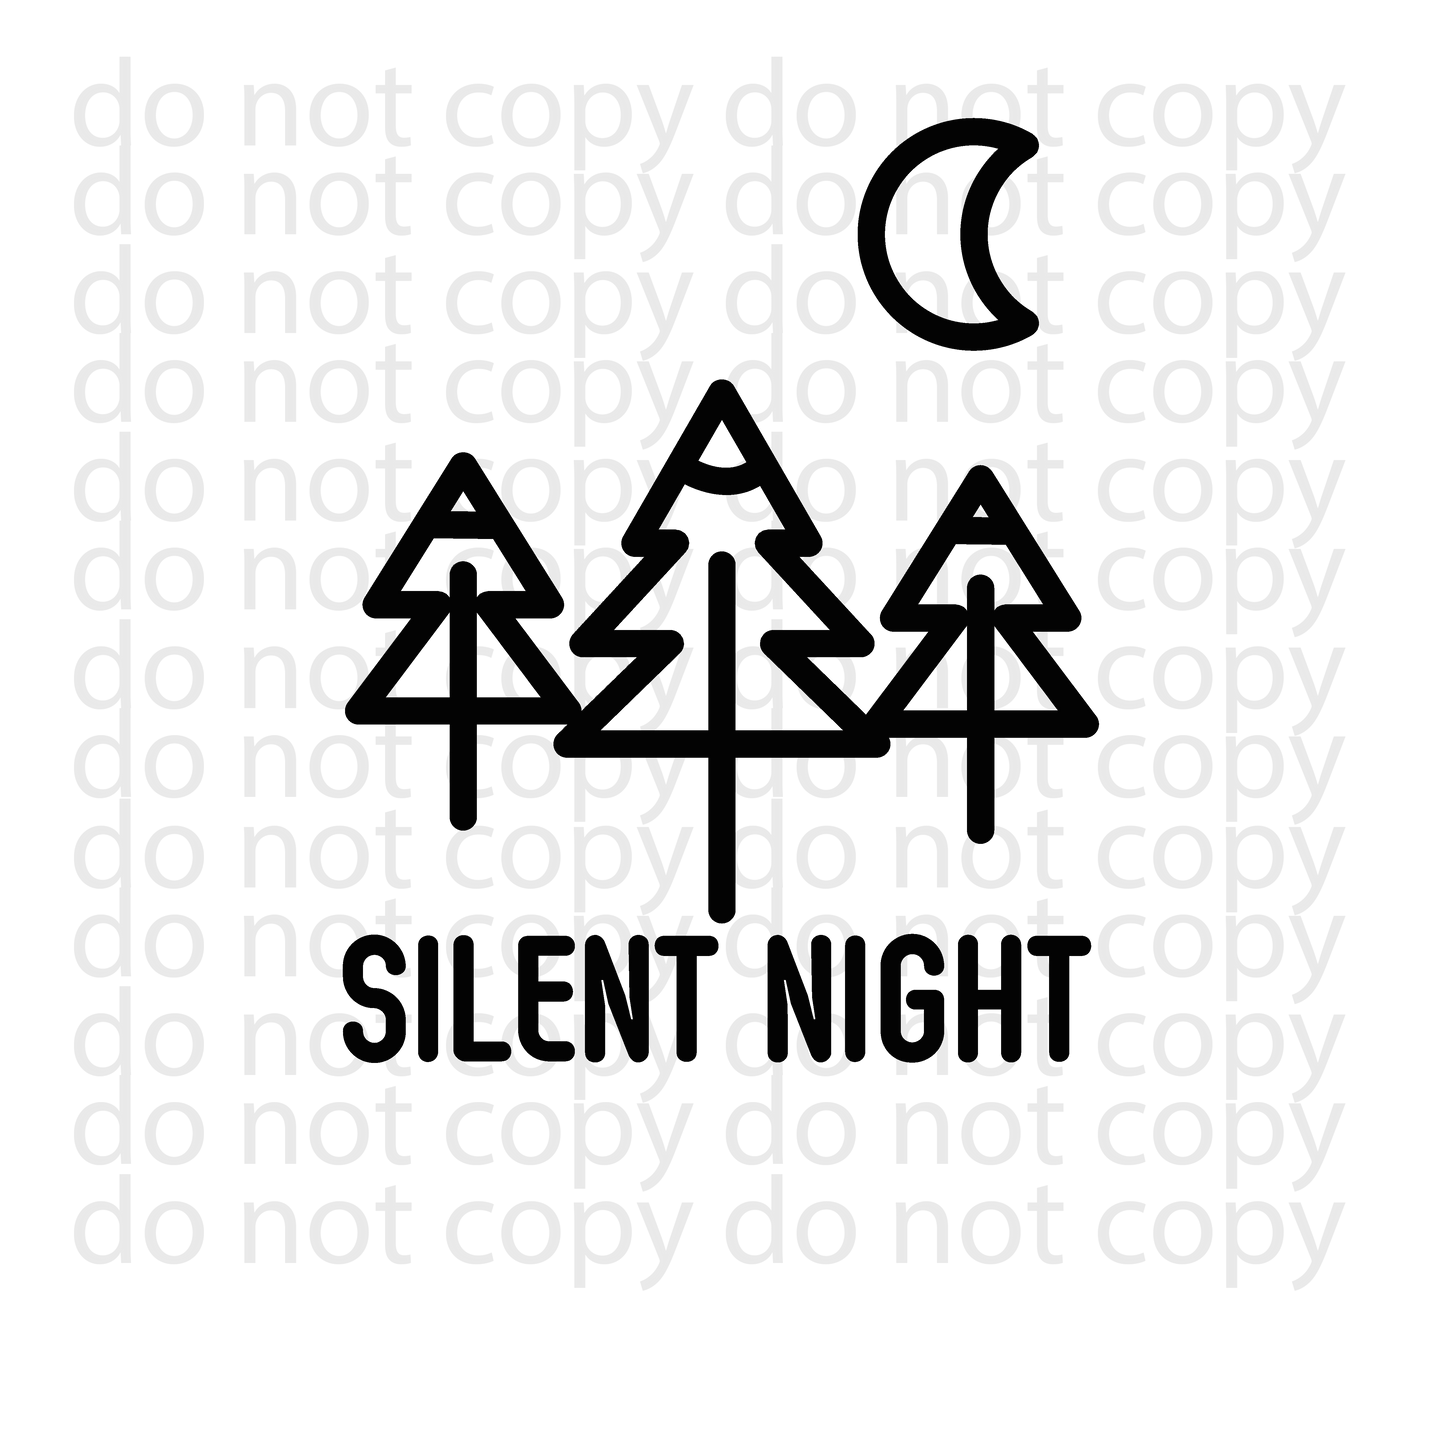 silent night decal